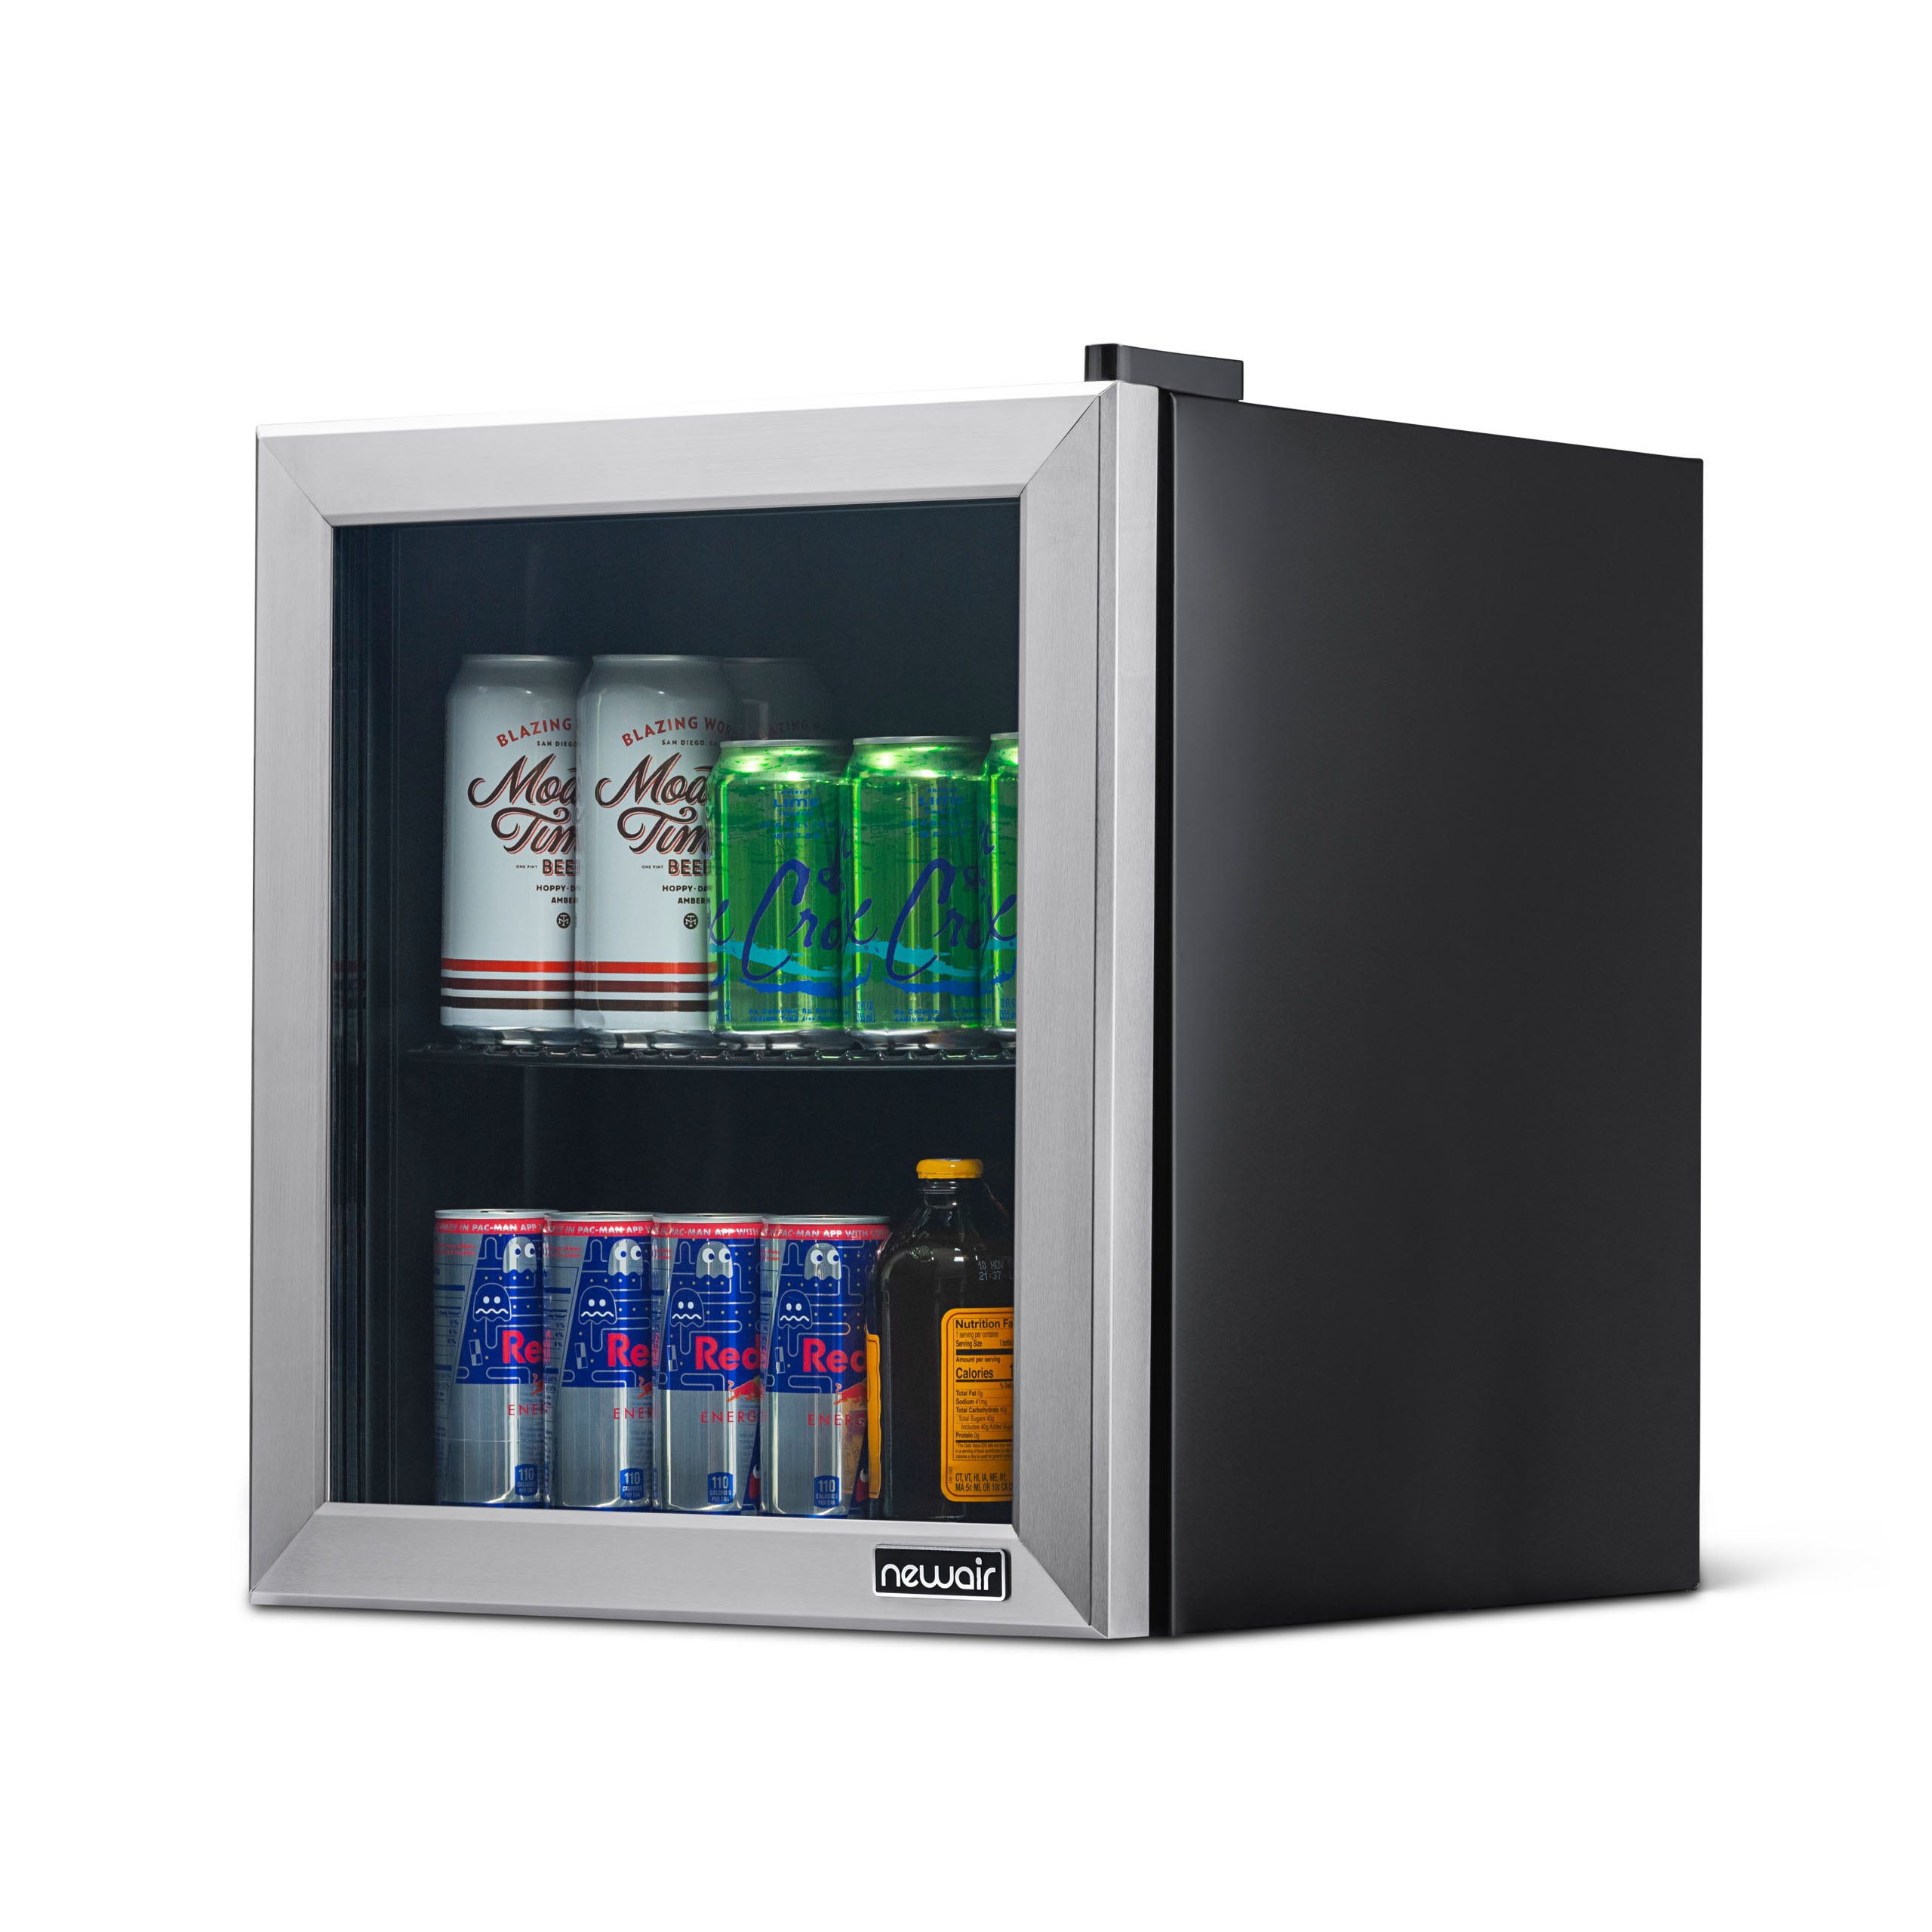 https://cdn.shopify.com/s/files/1/0066/7595/5769/t/31/assets/9e98640bf321--14-newair-beverage-refrigerator-nbc060ss00-hero.jpg?v=1581531060